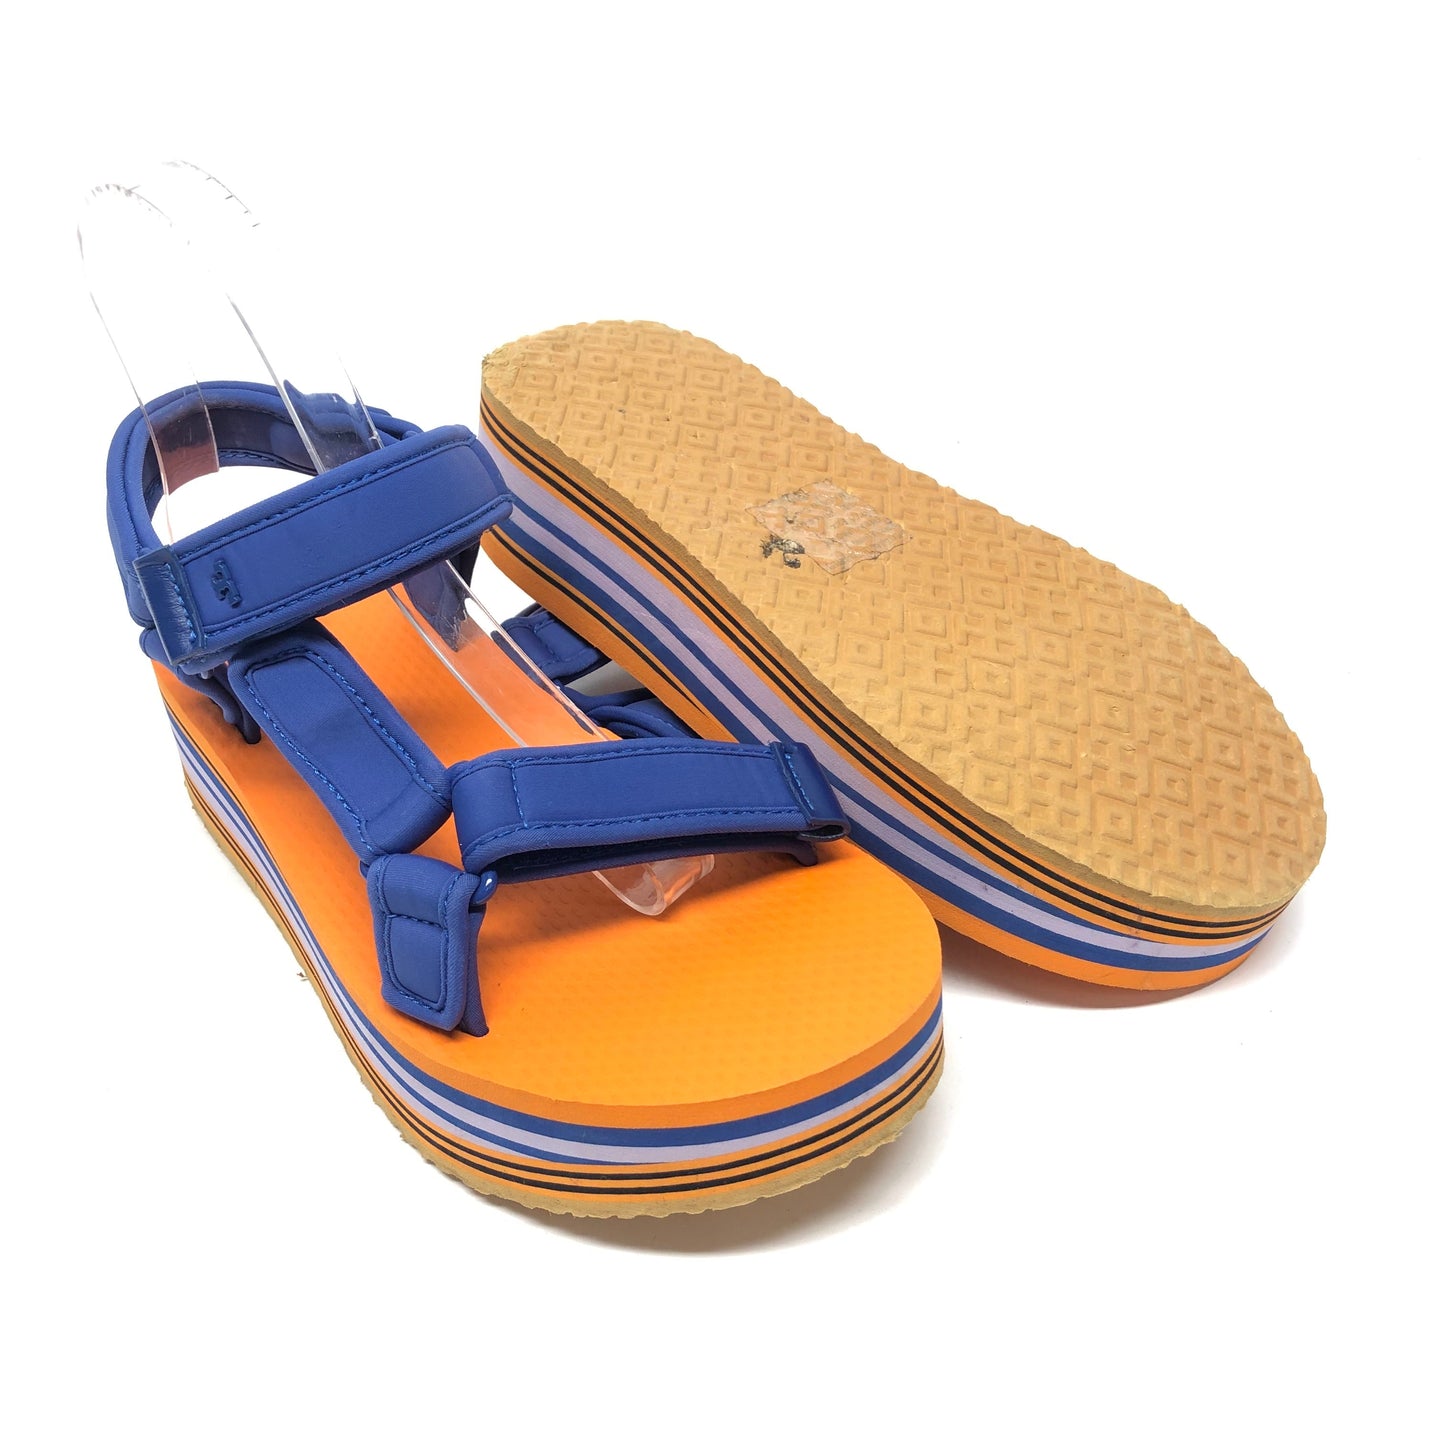 Blue & Orange Sandals Heels Platform Tory Burch, Size 8